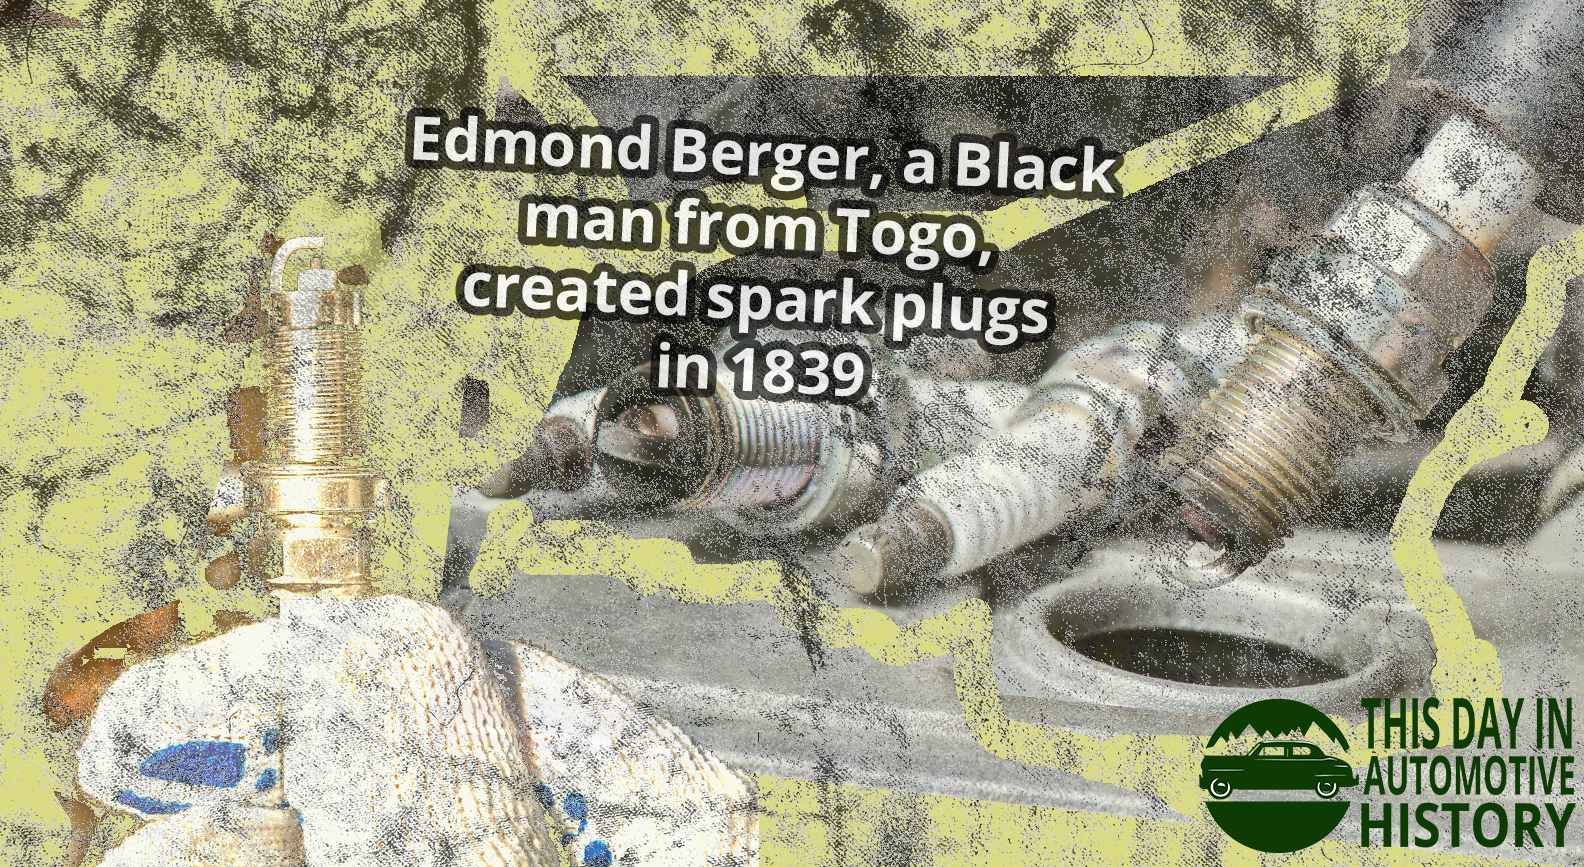 February 2, 1839 – Edmond Berger invents the spark plug